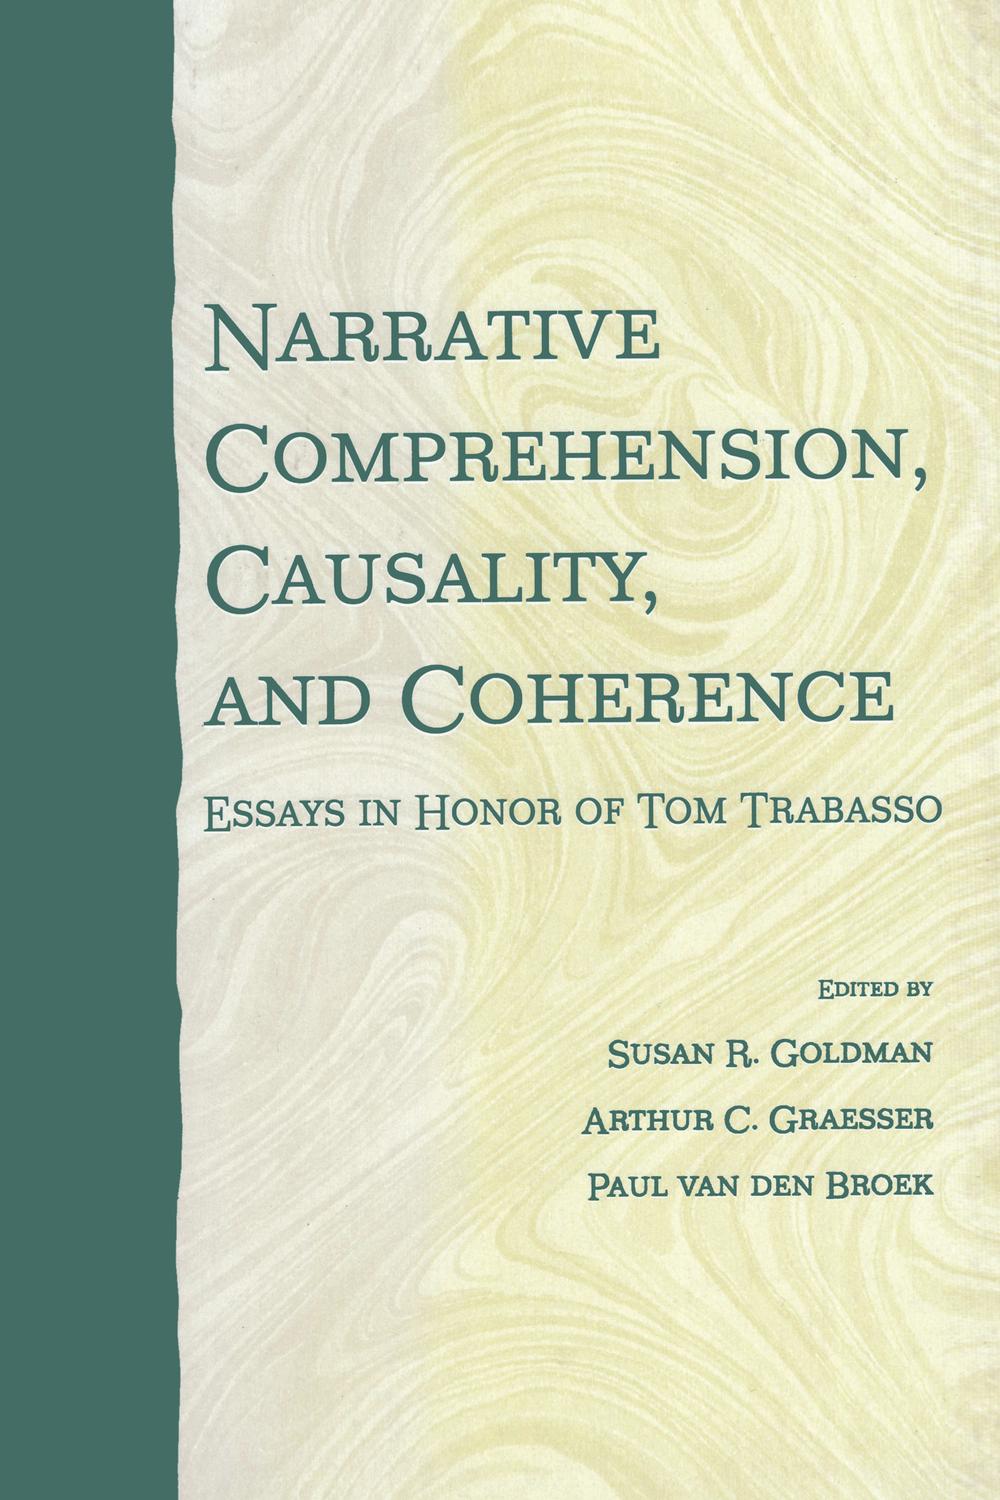 Narrative Comprehension, Causality, and Coherence - Susan R. Goldman, Arthur C. Graesser, Paul van den Broek